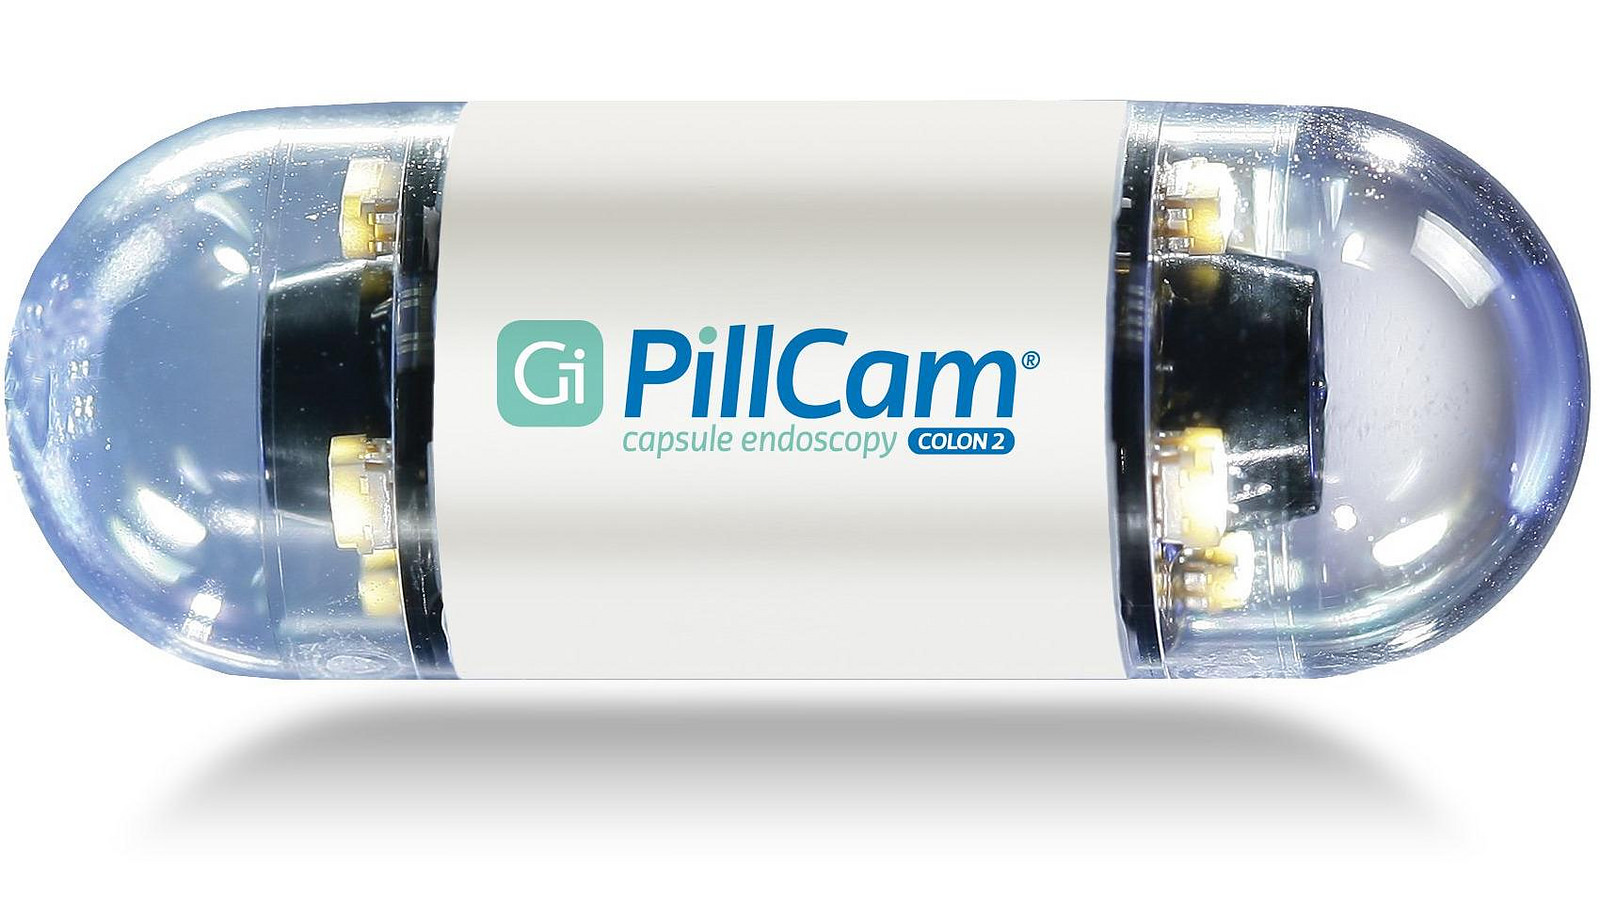 PillCam COLON2 capsule. Photo courtesy of Medtronic